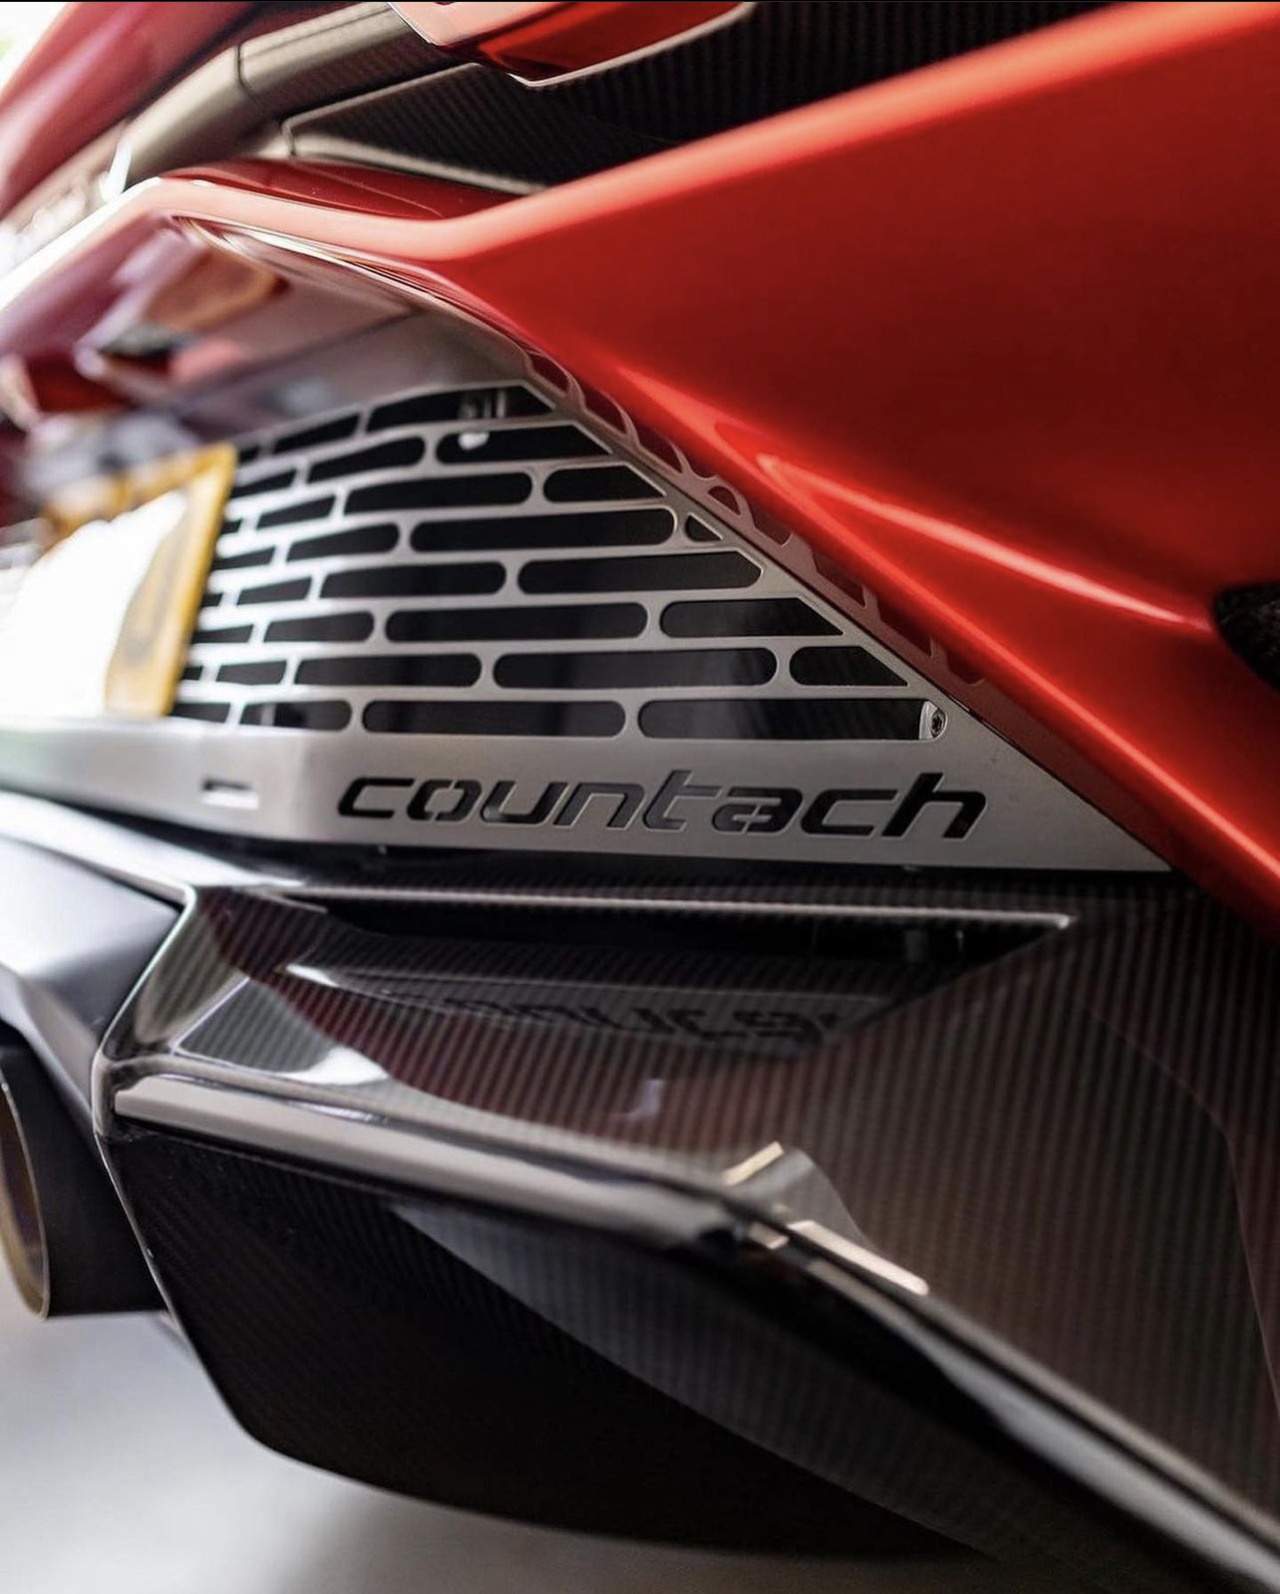 XXX mccliningray26-blog:Lamborghini Countach photo